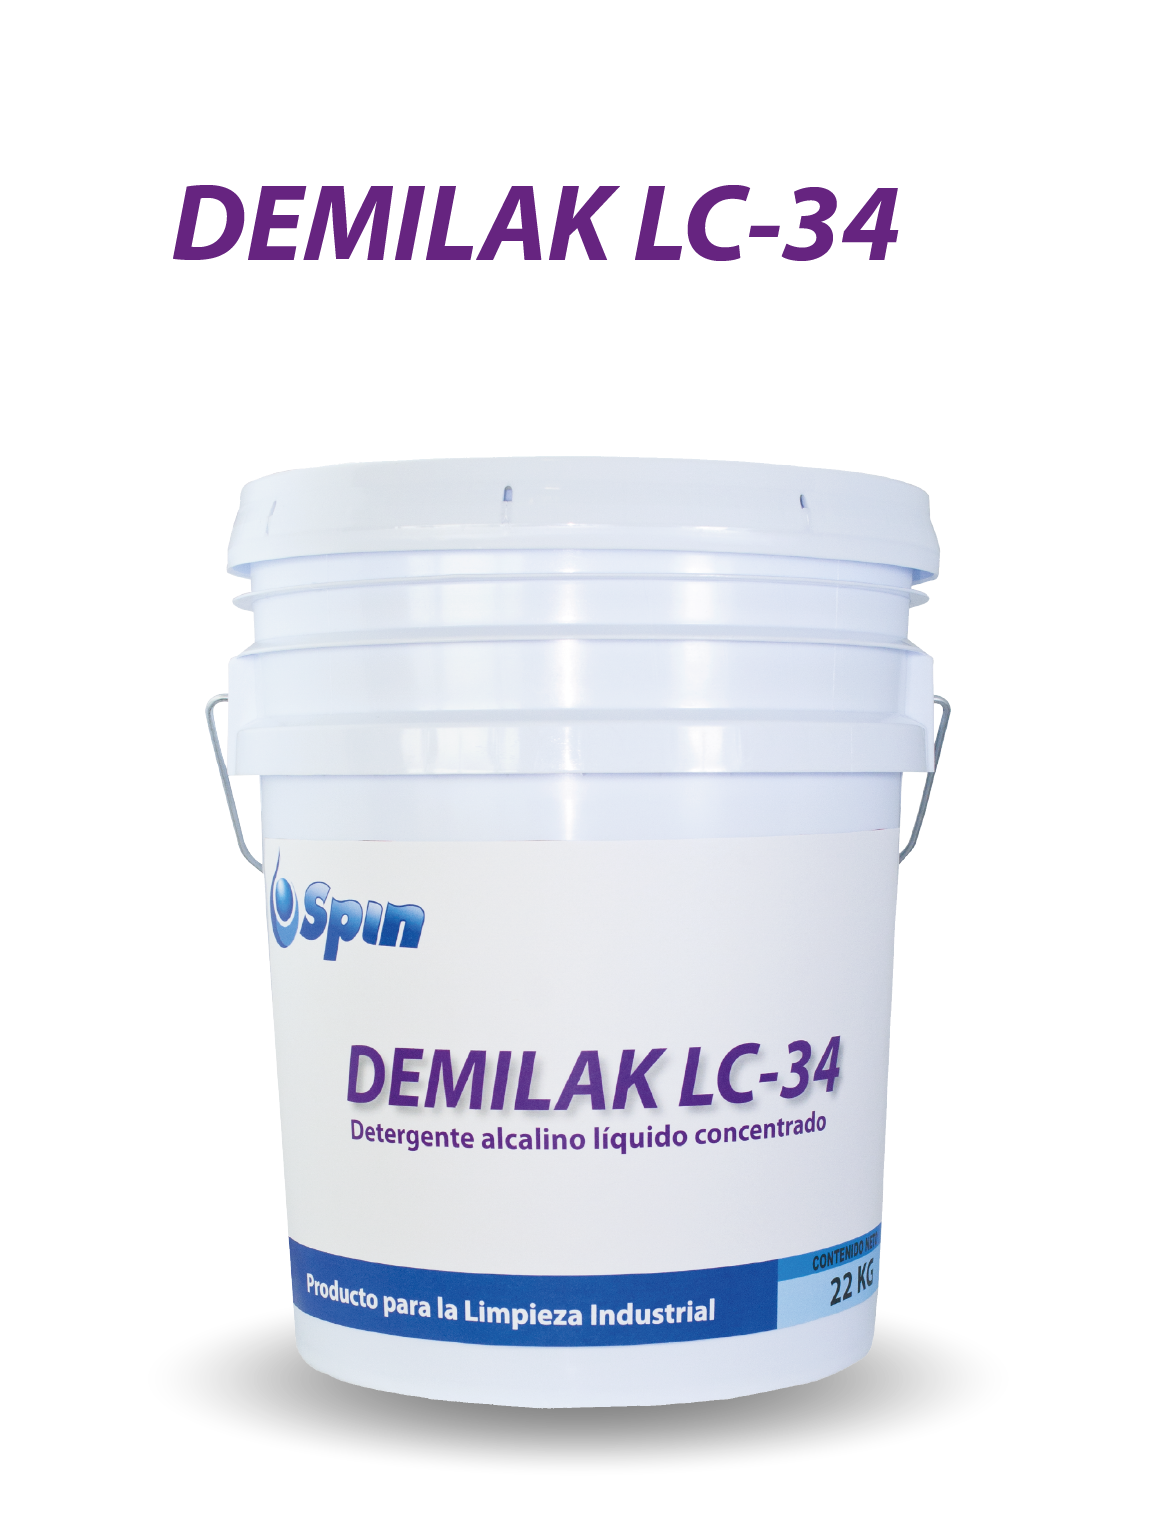 DEMILAK LC-34